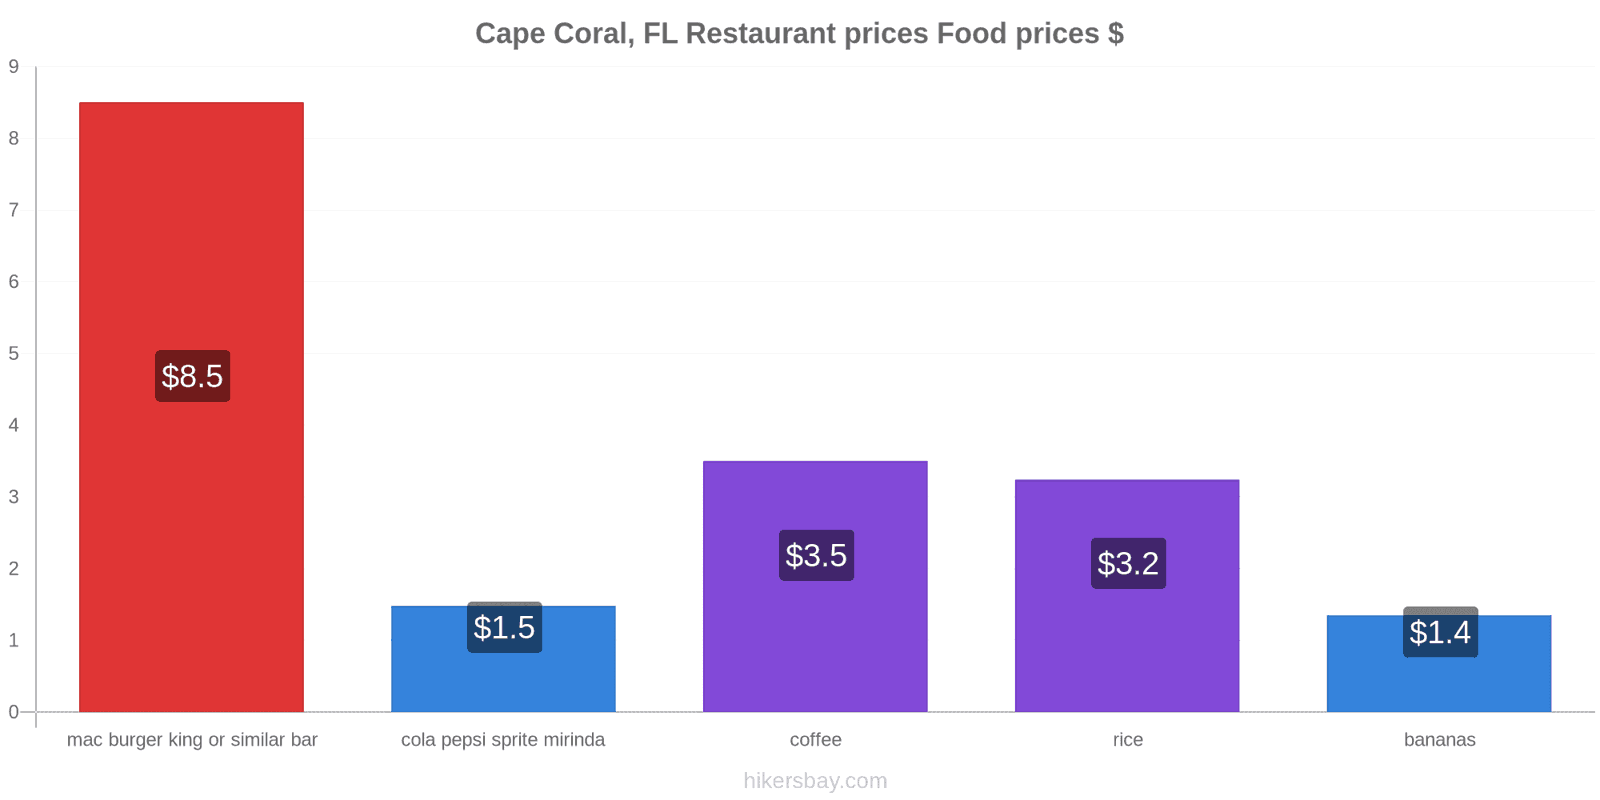 Cape Coral, FL price changes hikersbay.com